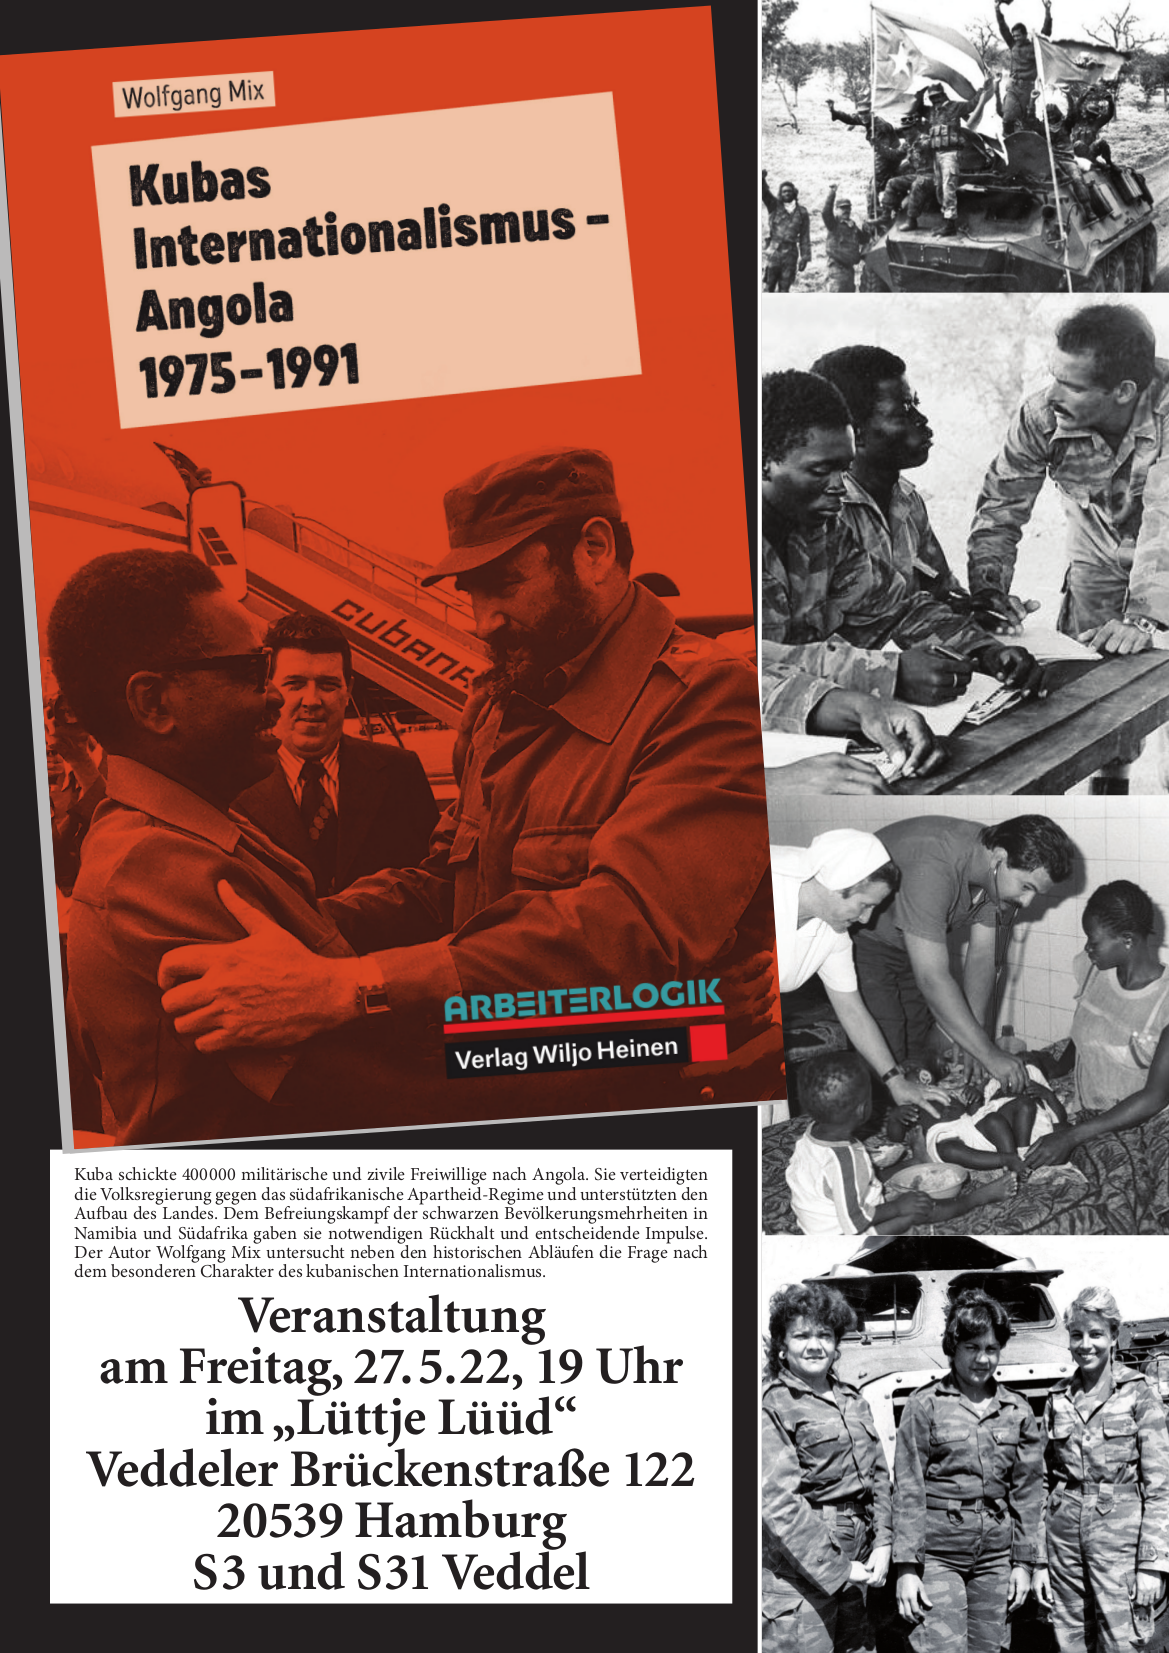 Kubas Internationalismus - Angola 1975-1991